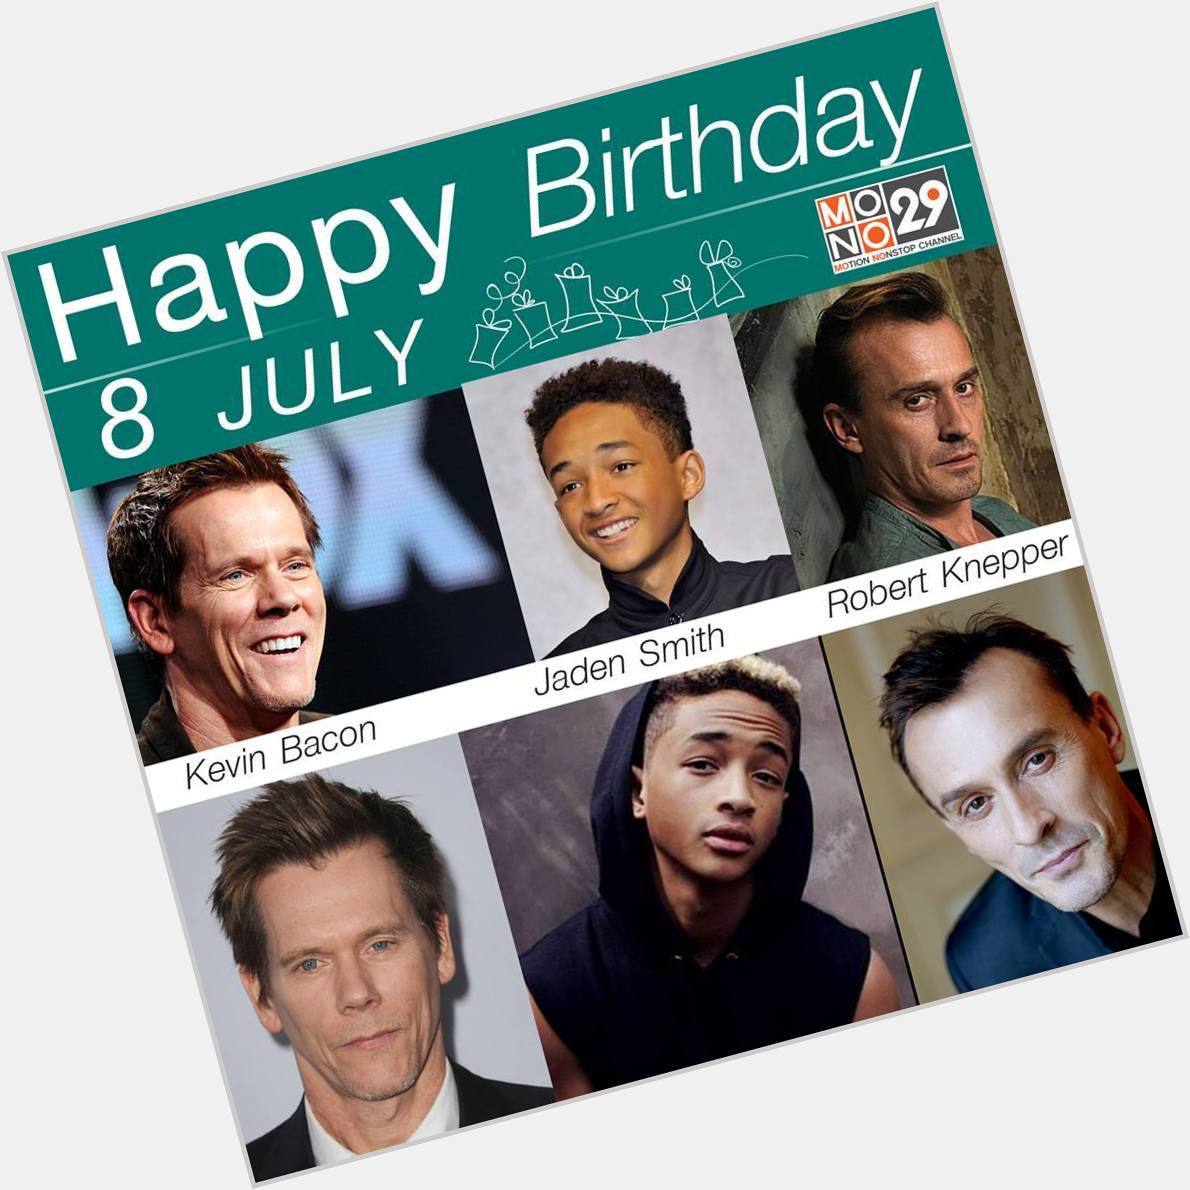 8 July Happy Birthday
Kevin Bacon (1958)
Jaden Smith (1998)
Robert Knepper (1959) 